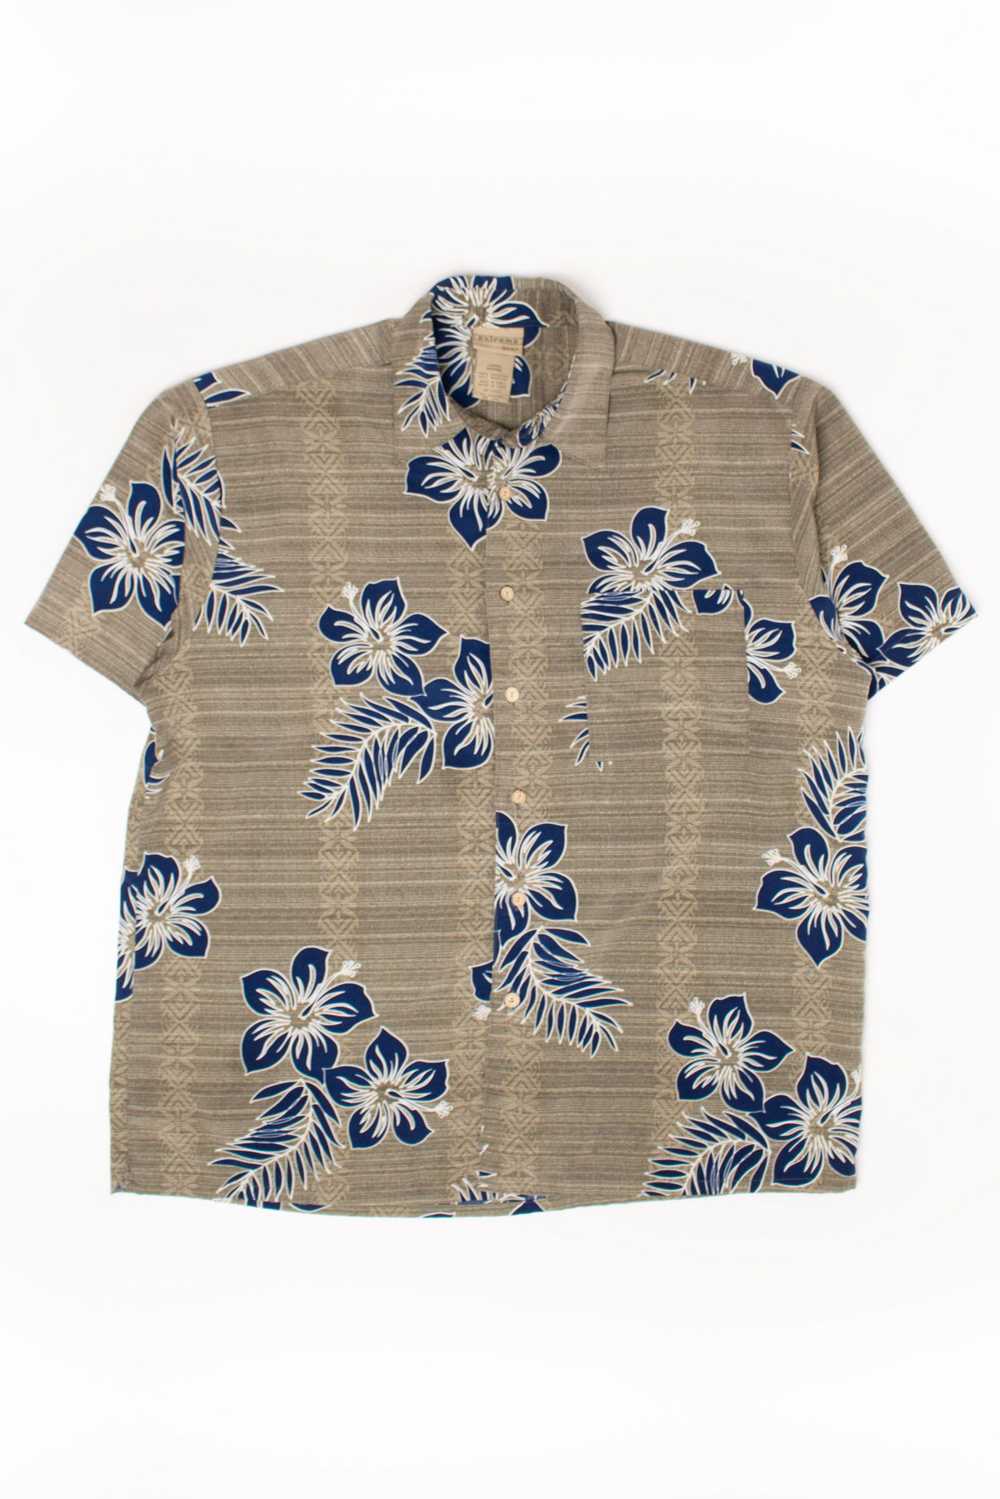 Sage Green Floral Hawaiian Shirt - image 2